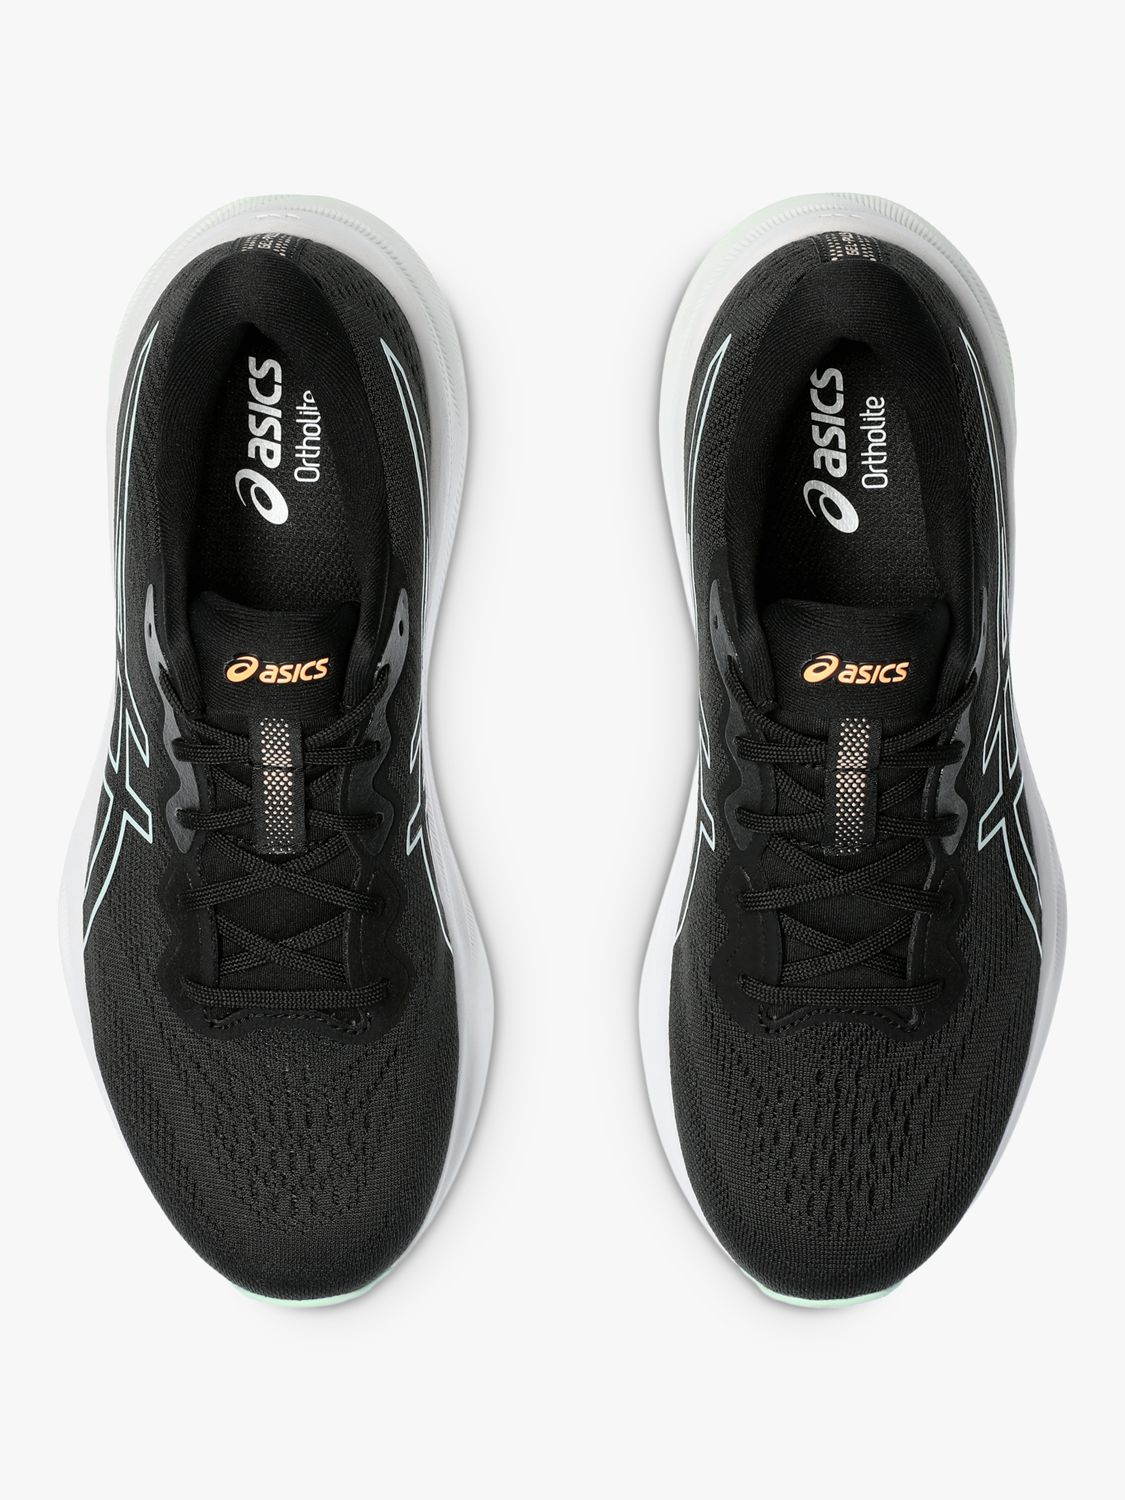 Buy ASICS GEL-PULSE 15 Women's Running Shoes, Black/Mint Online at johnlewis.com